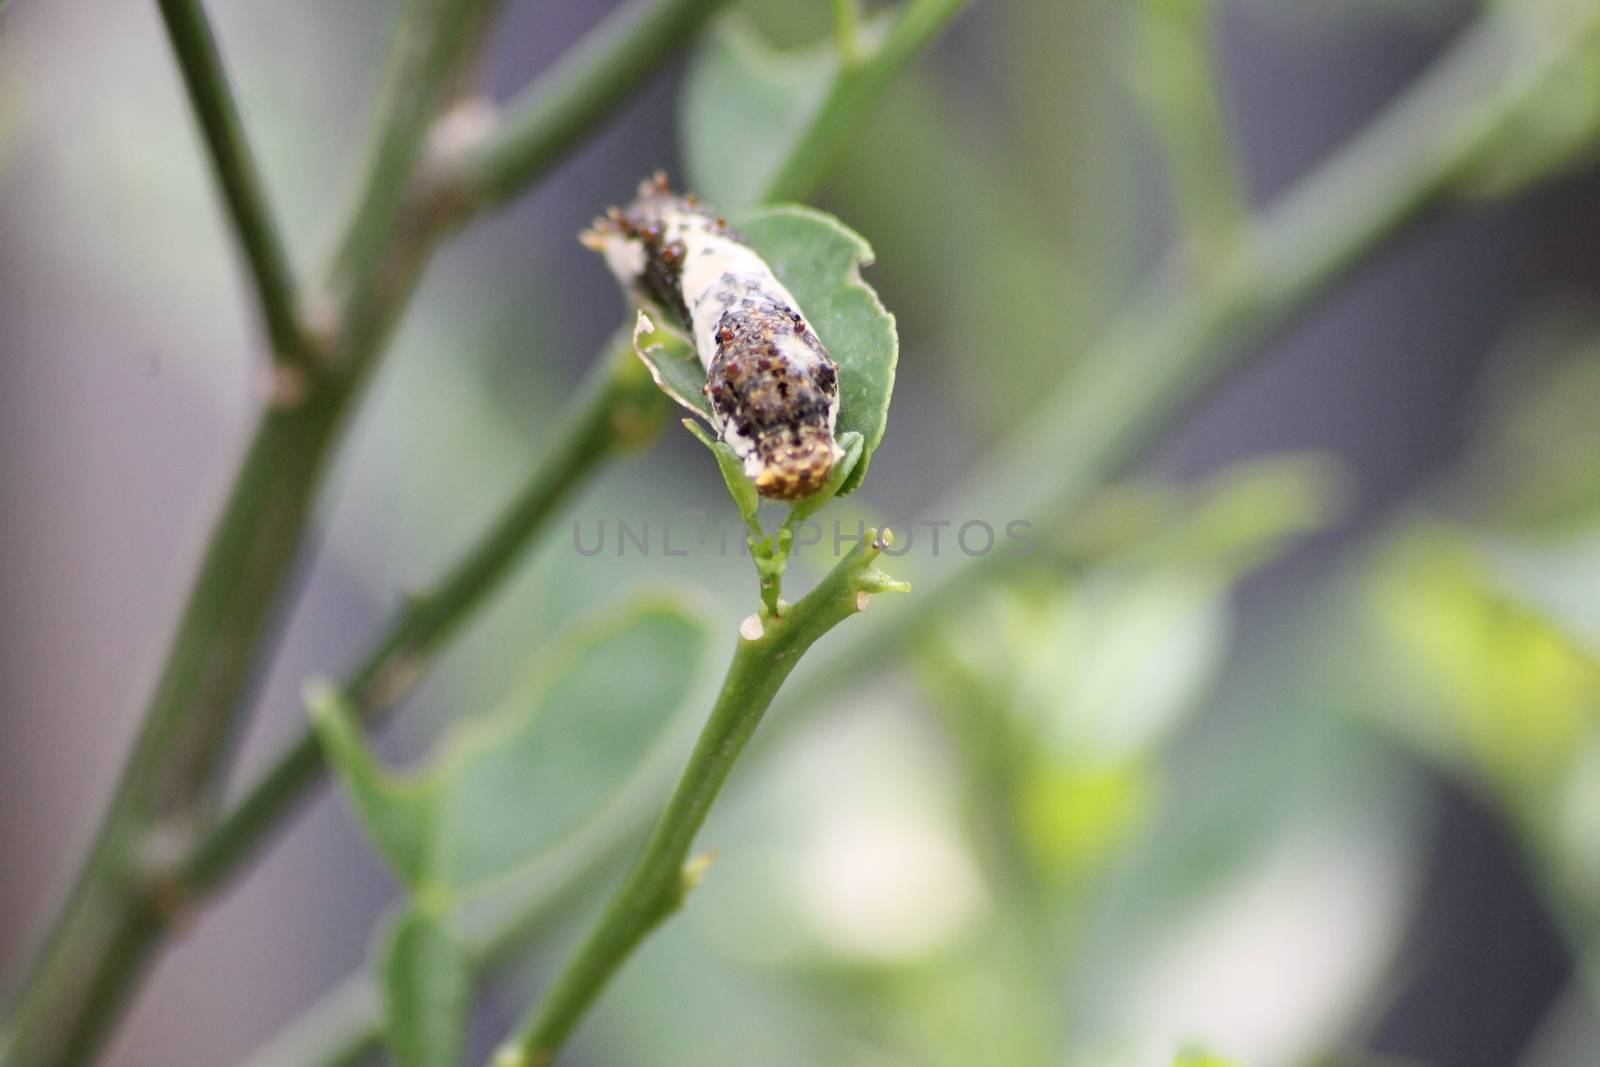 a caterpillar crawls on a tree branch by imagifa